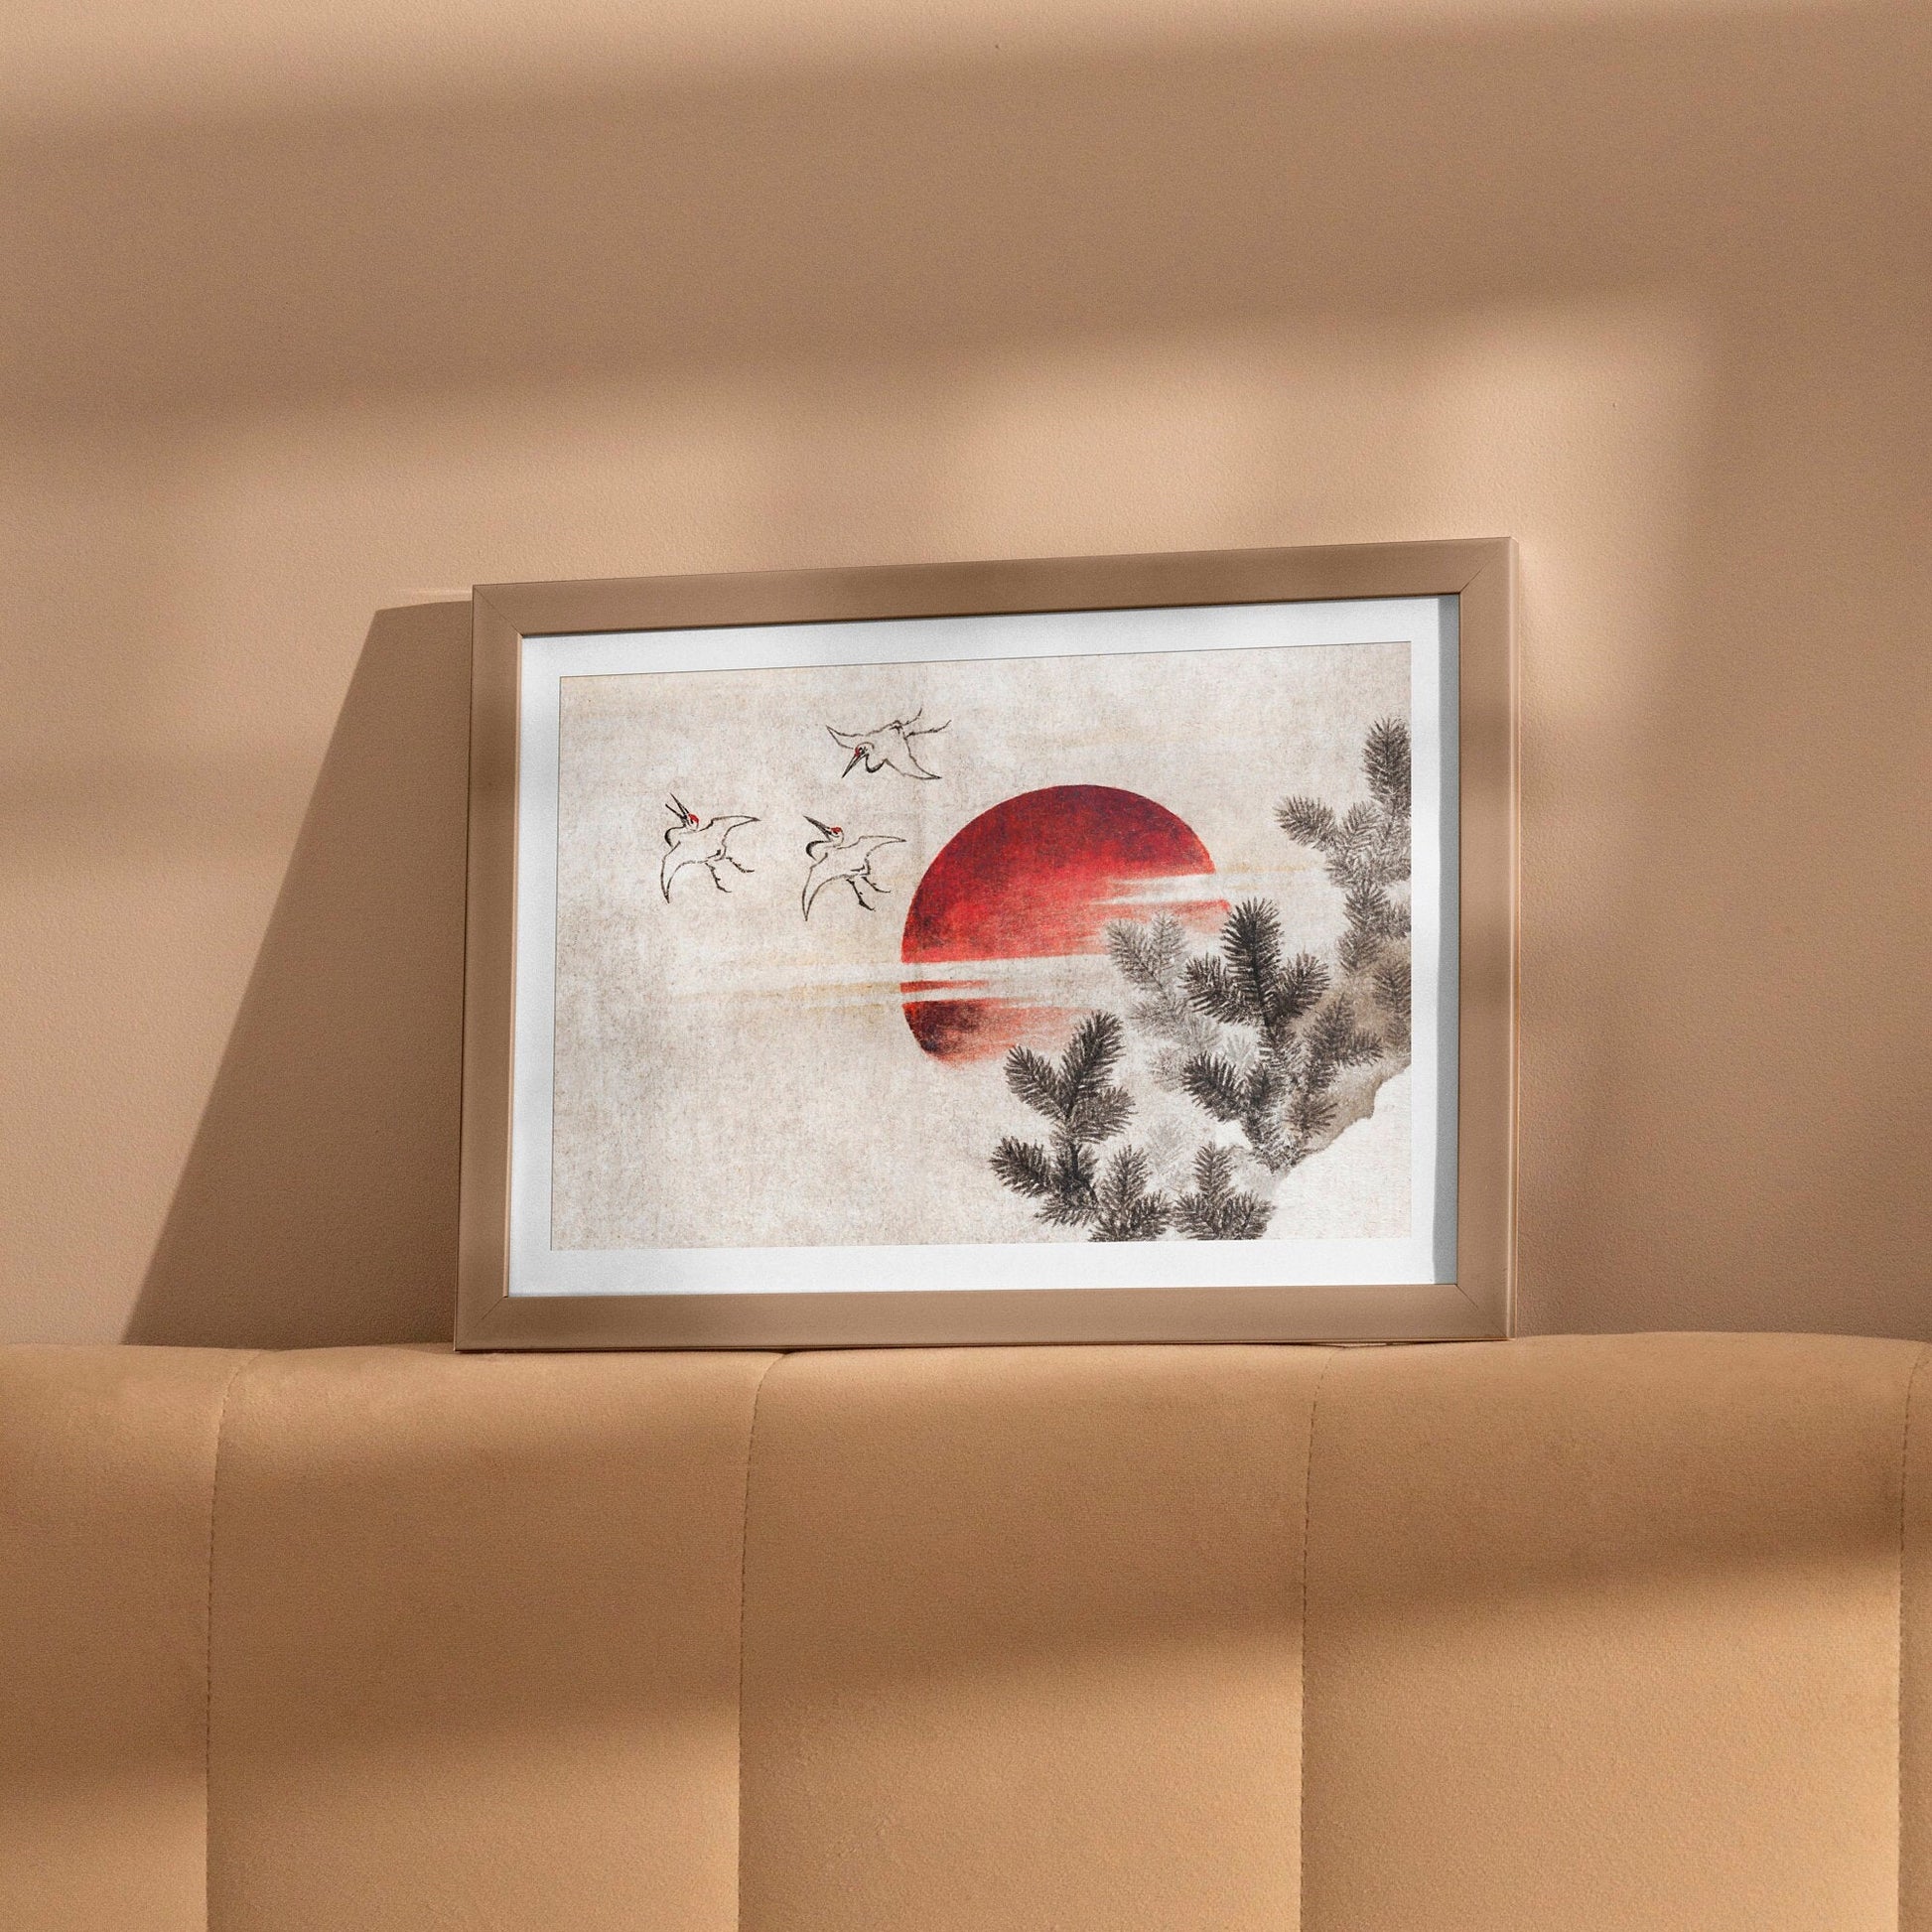 KATSUSHIKA HOKUSAI - Birds & Sunset - Pathos Studio - Posters, Prints, & Visual Artwork